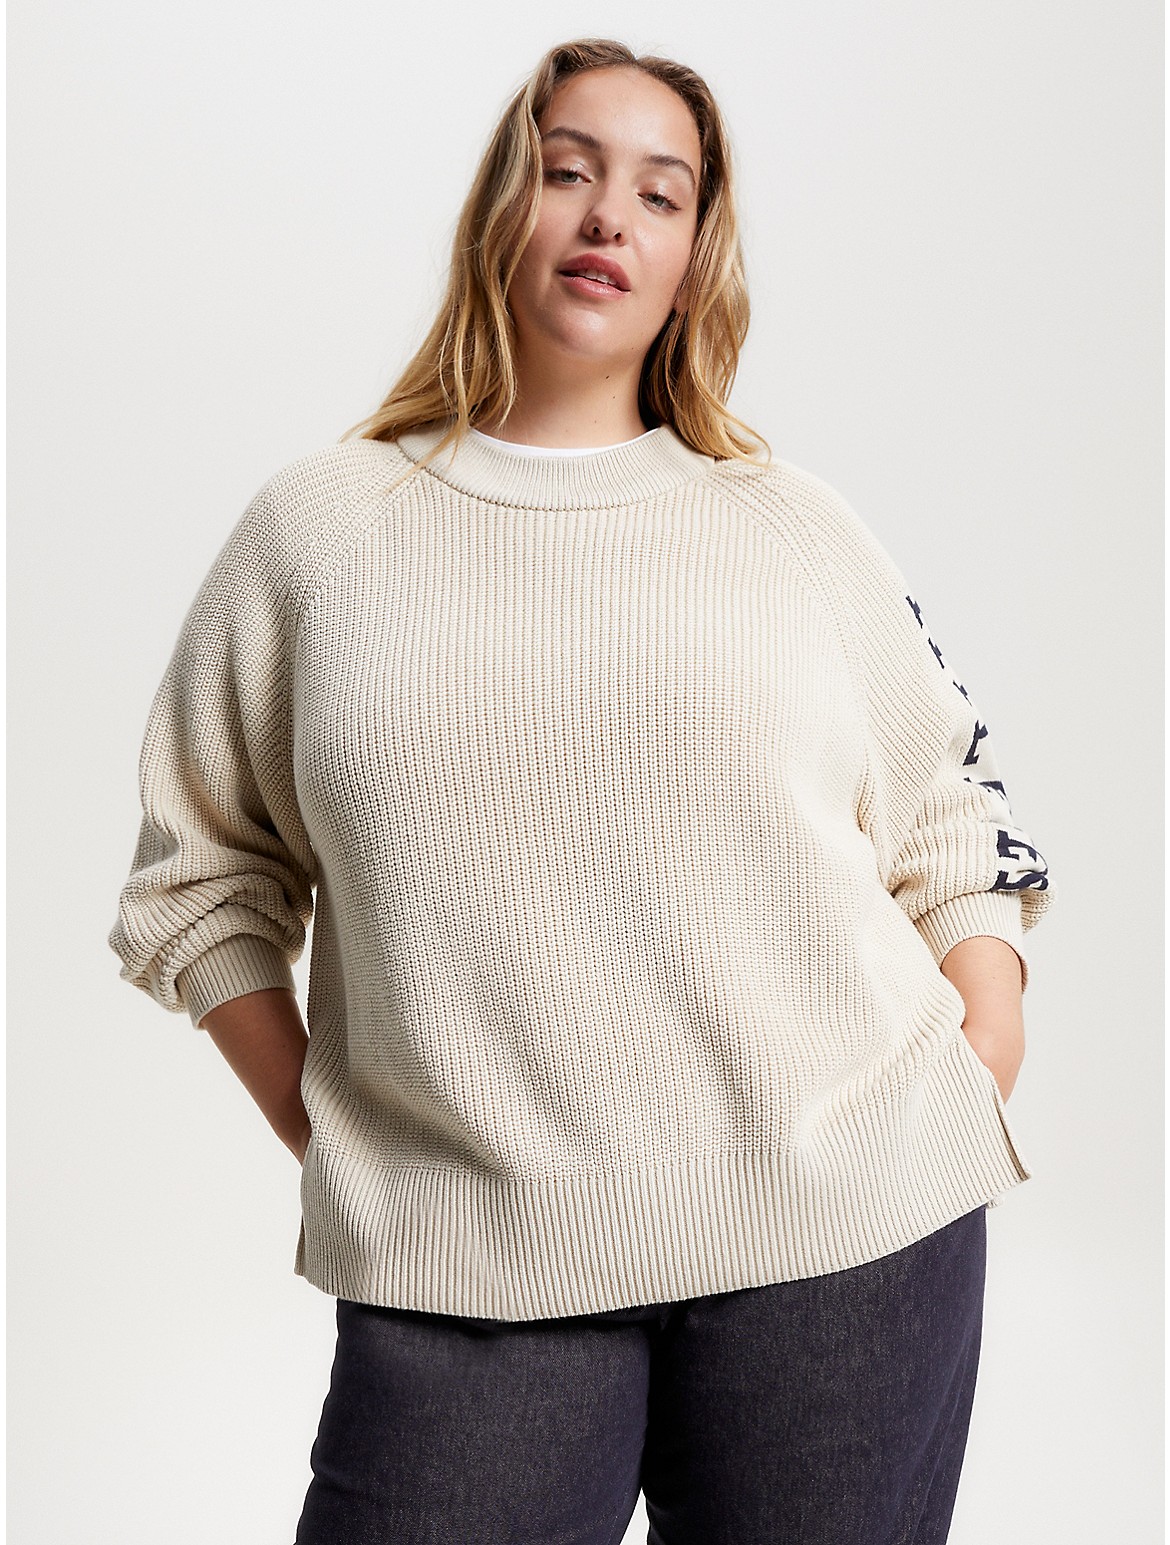 Tommy Hilfiger Women's Curve Hilfiger Crewneck Sweater